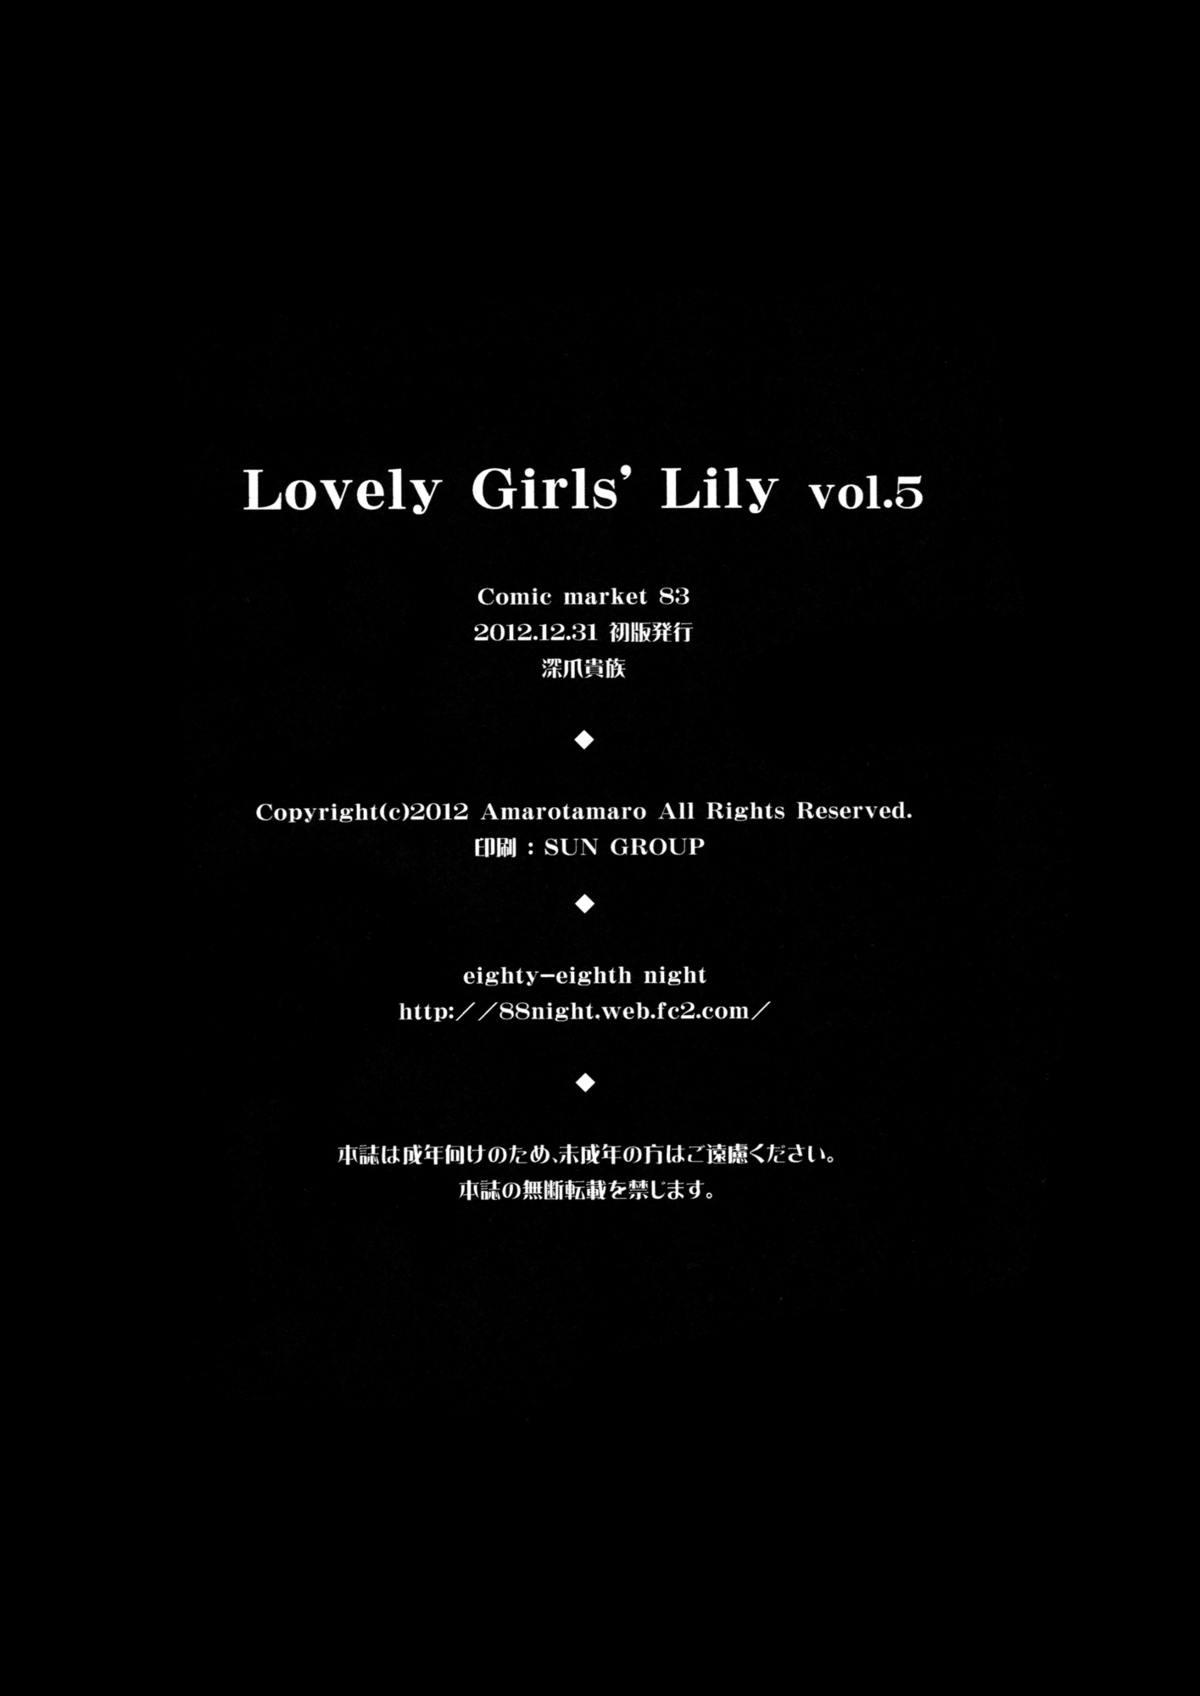 Lovely Girls' Lily Vol. 5 21